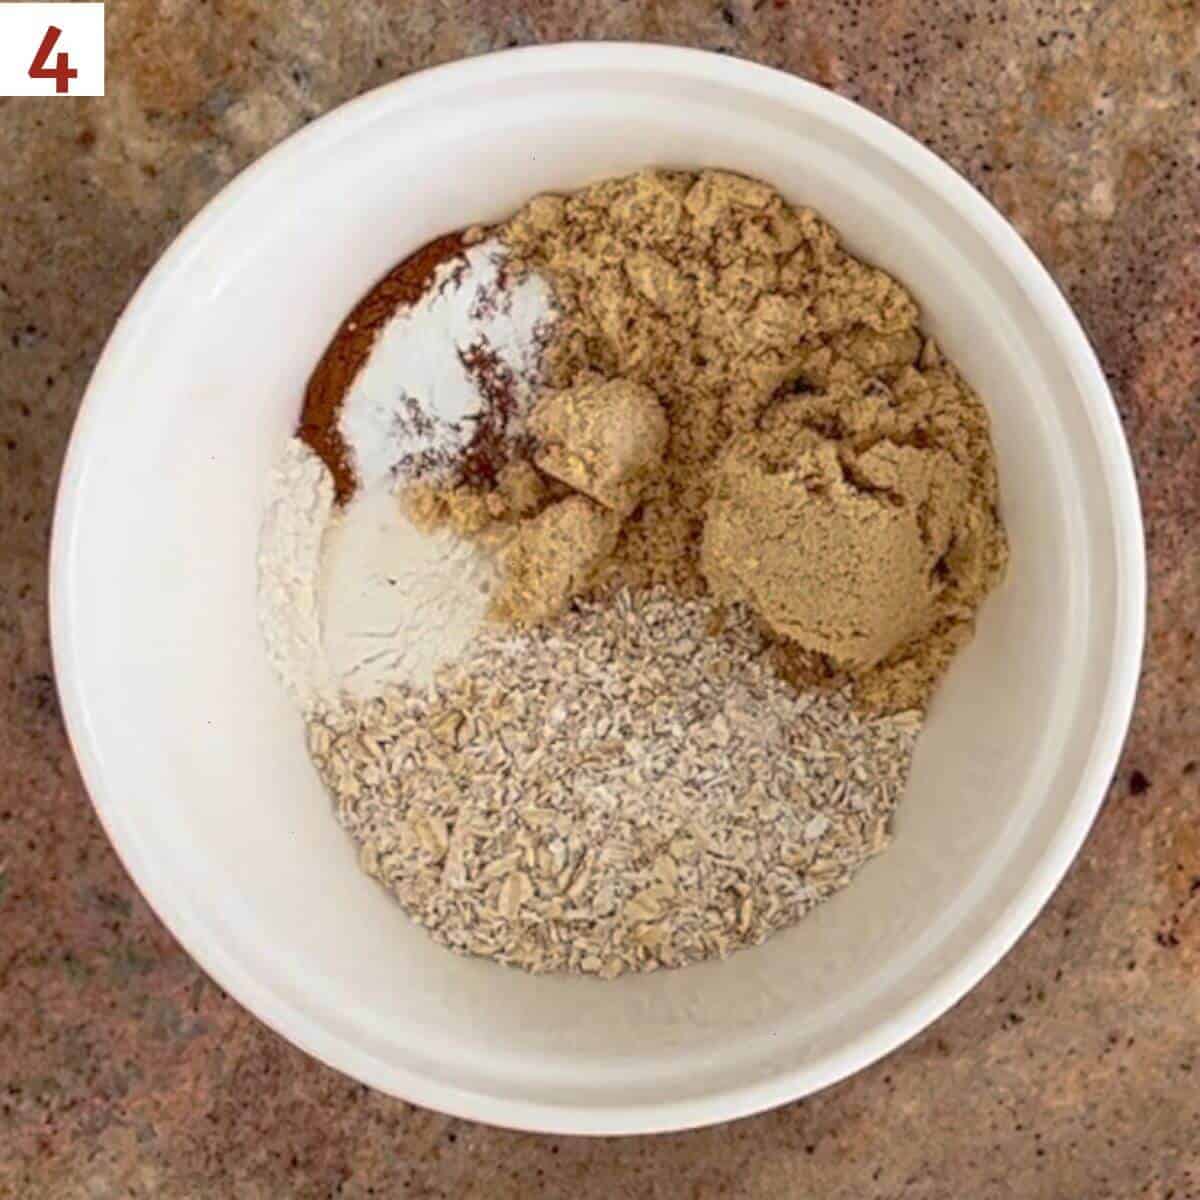 Flour, sugar, rolled oats, cinnamon, baking powder, and salt in a bowl.